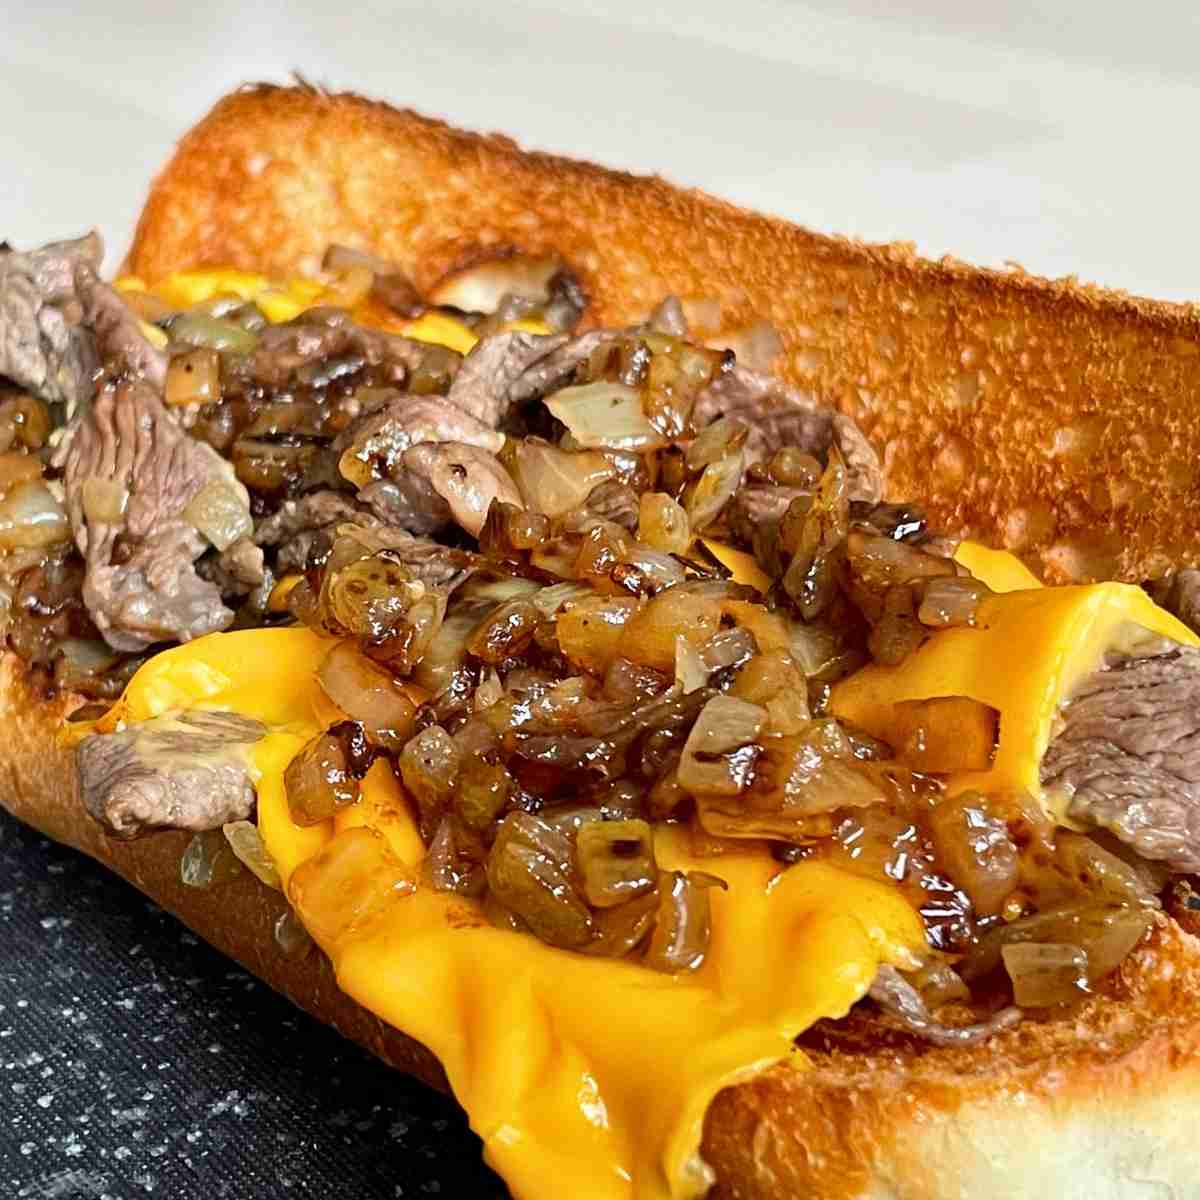 Philly cheesesteak recipe sandwich from Philadelphia